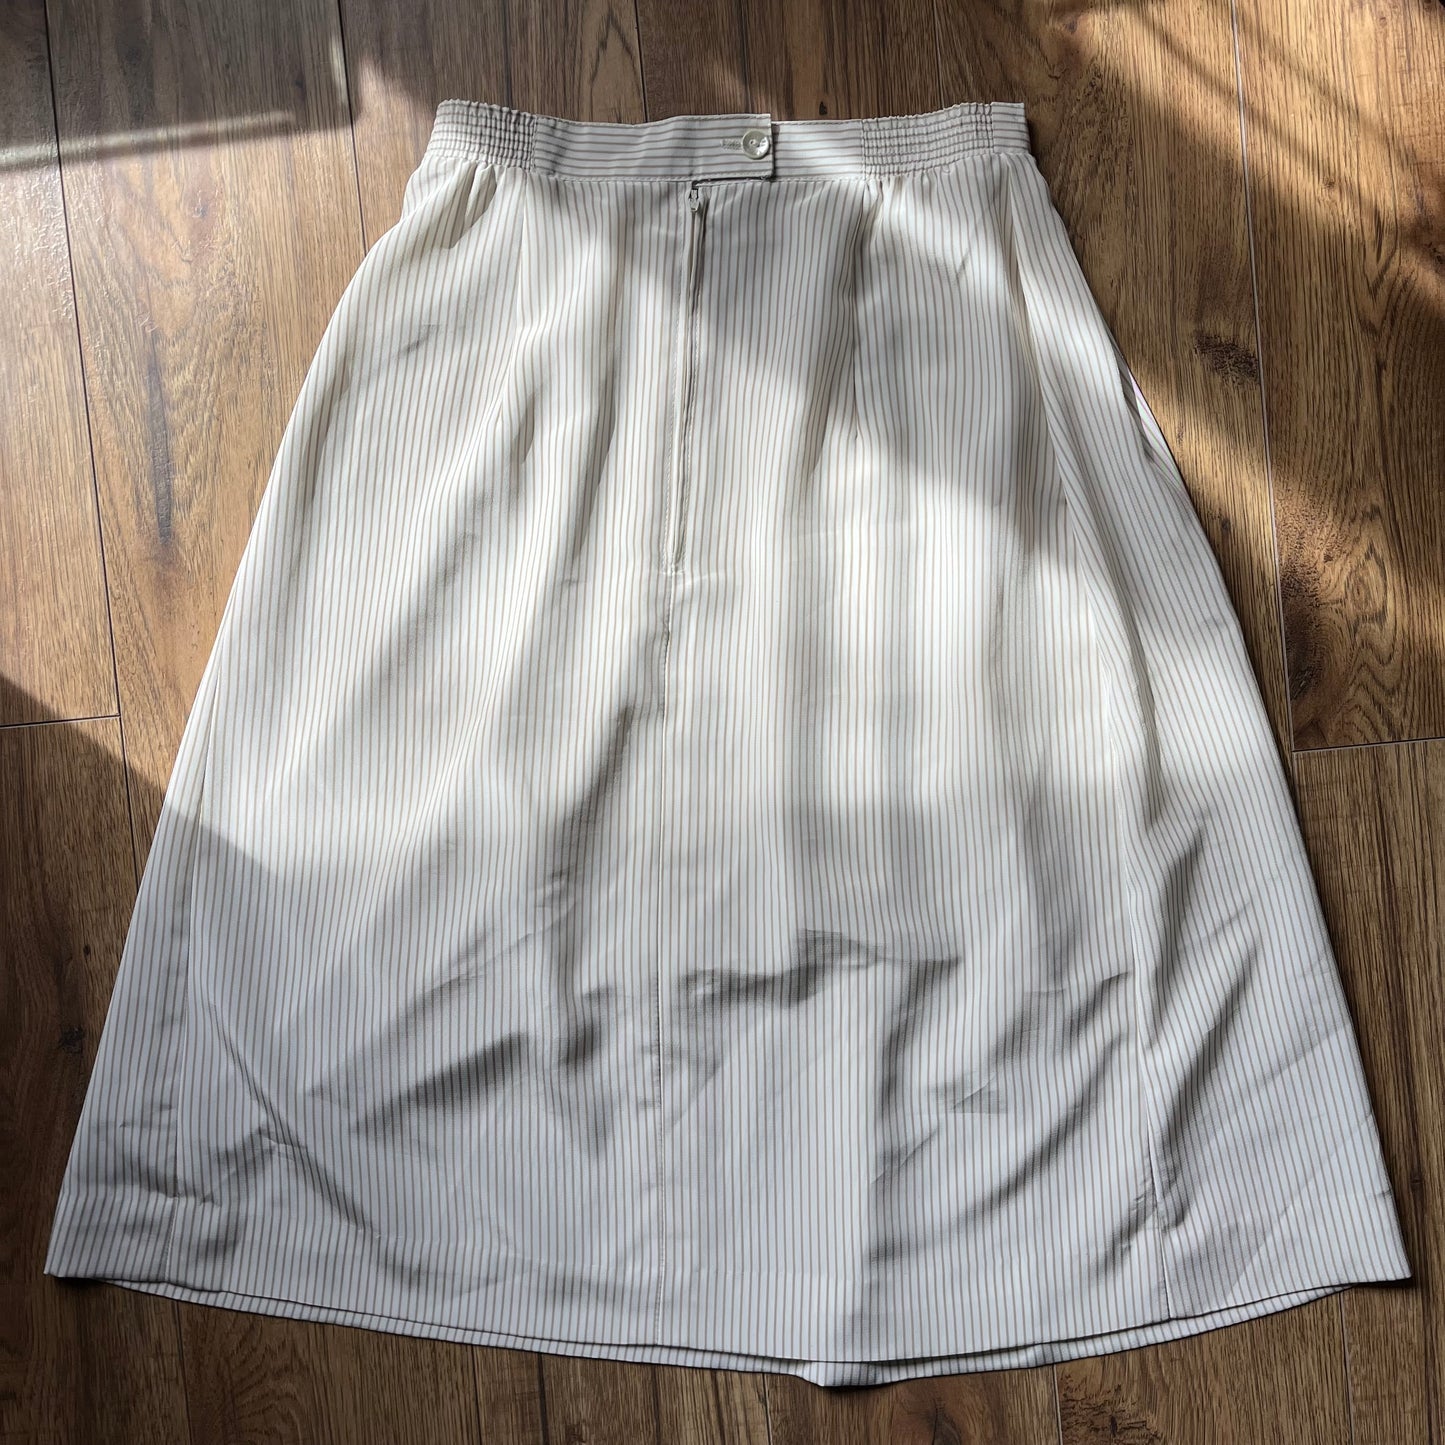 Vintage 70s Vertical Striped Pantman Skirt